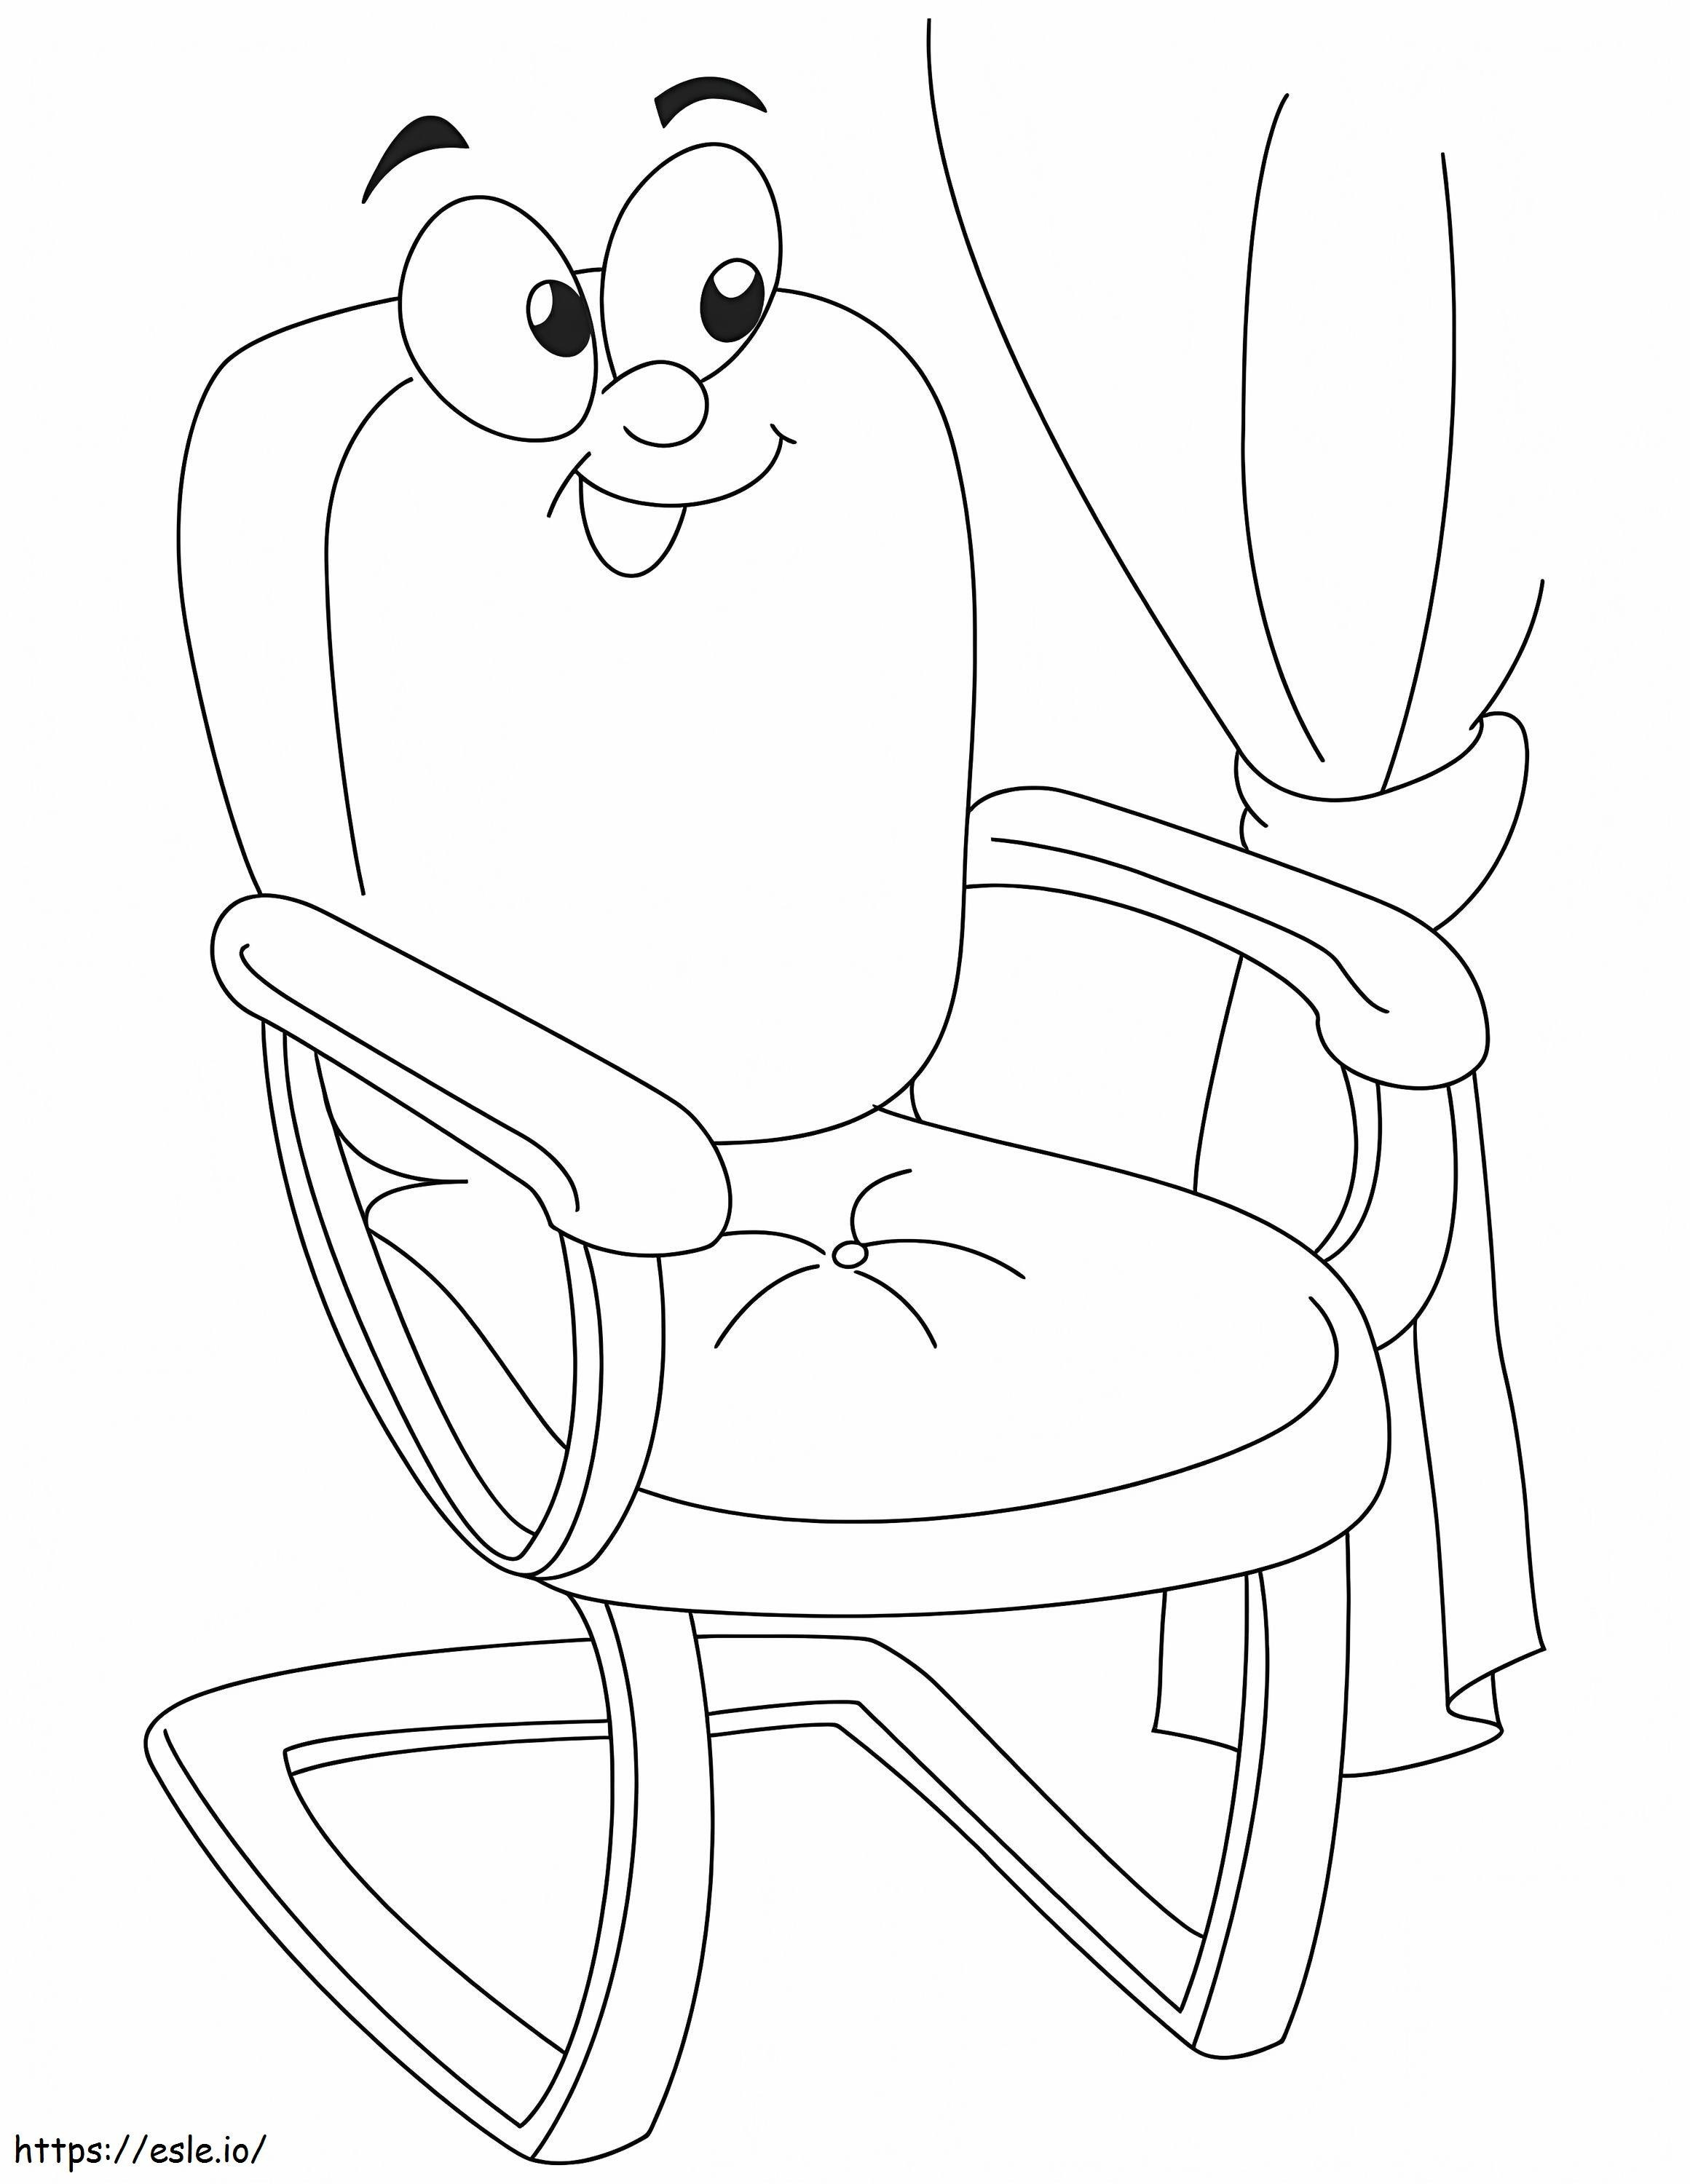 Cartoon-Stuhl ausmalbilder